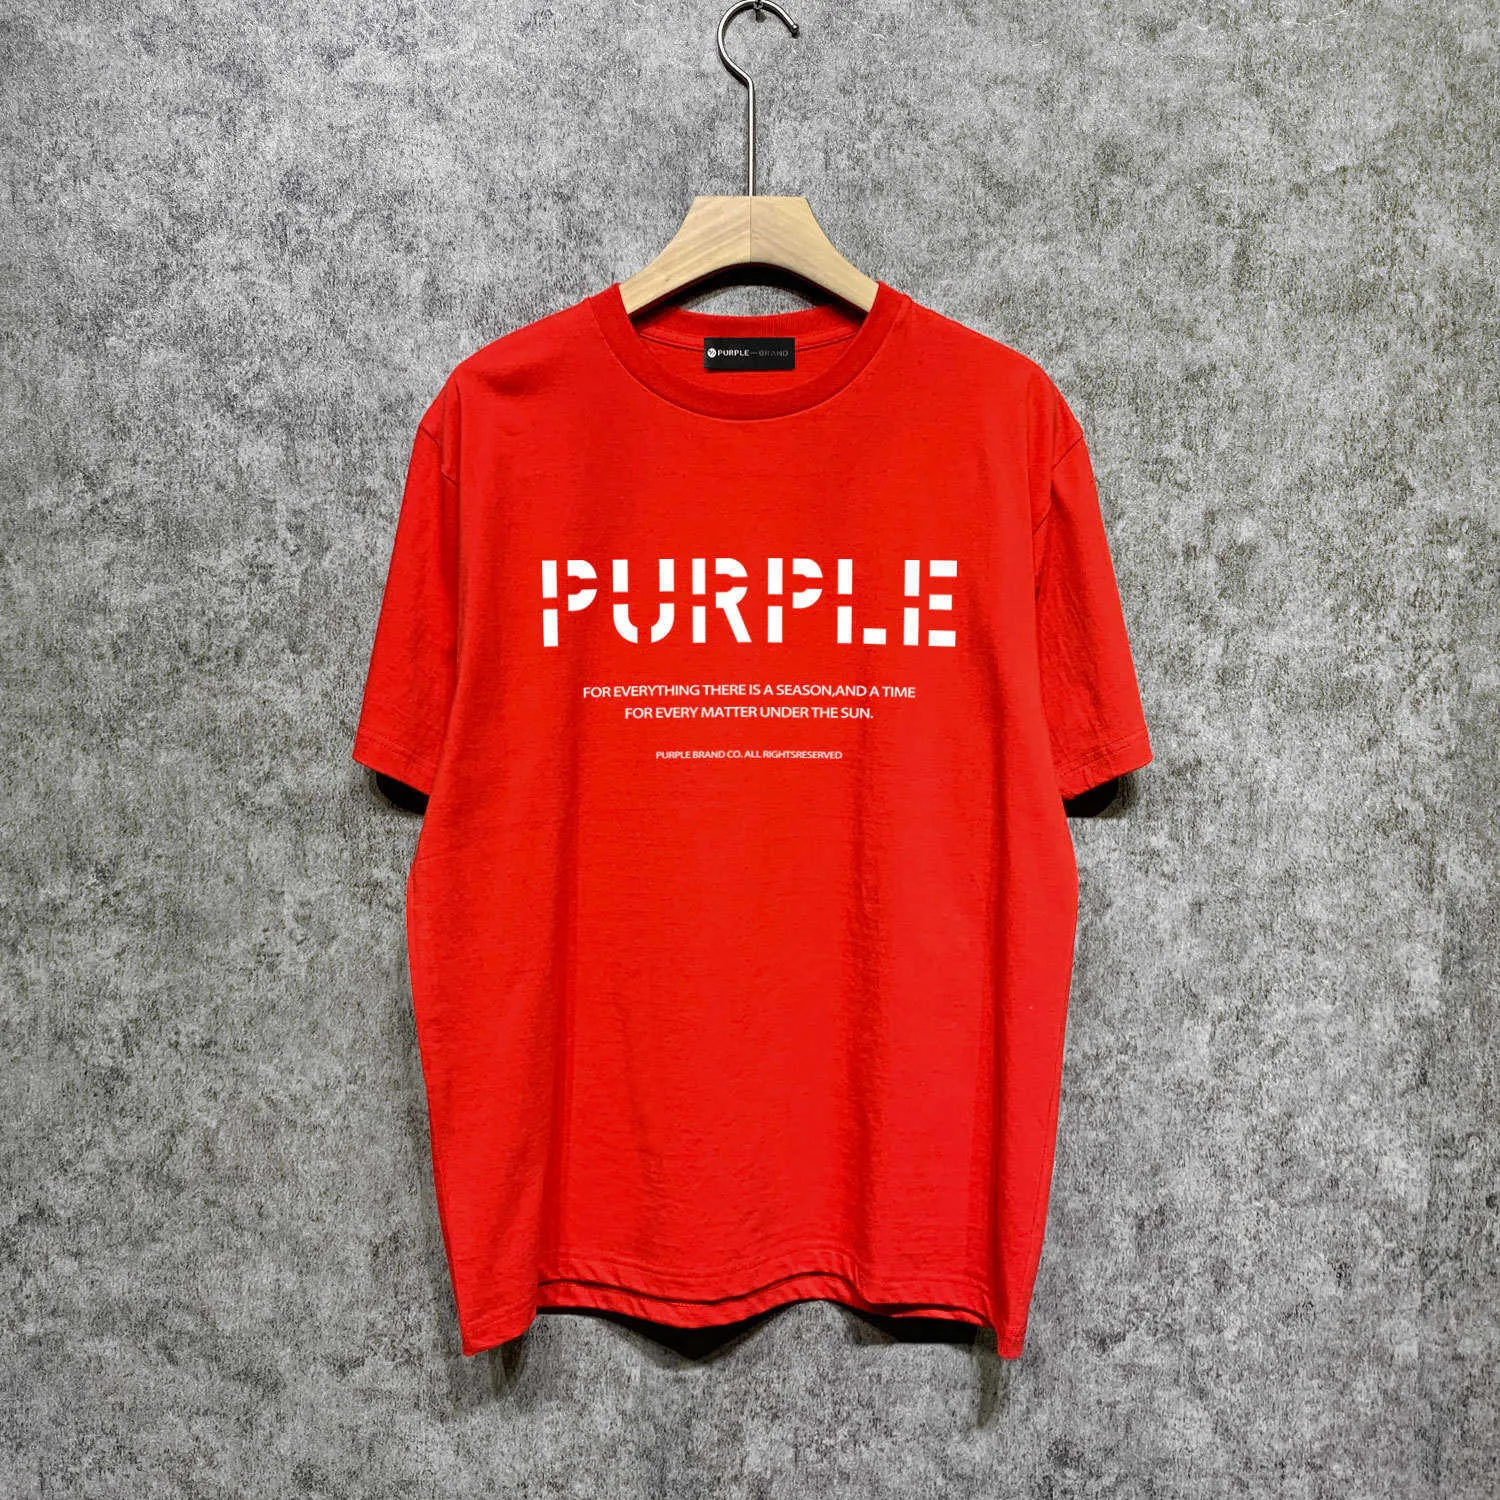 Long term trendy brand PURPLE BRAND T SHIRT short sleeved T-shirt shirtC3Z8